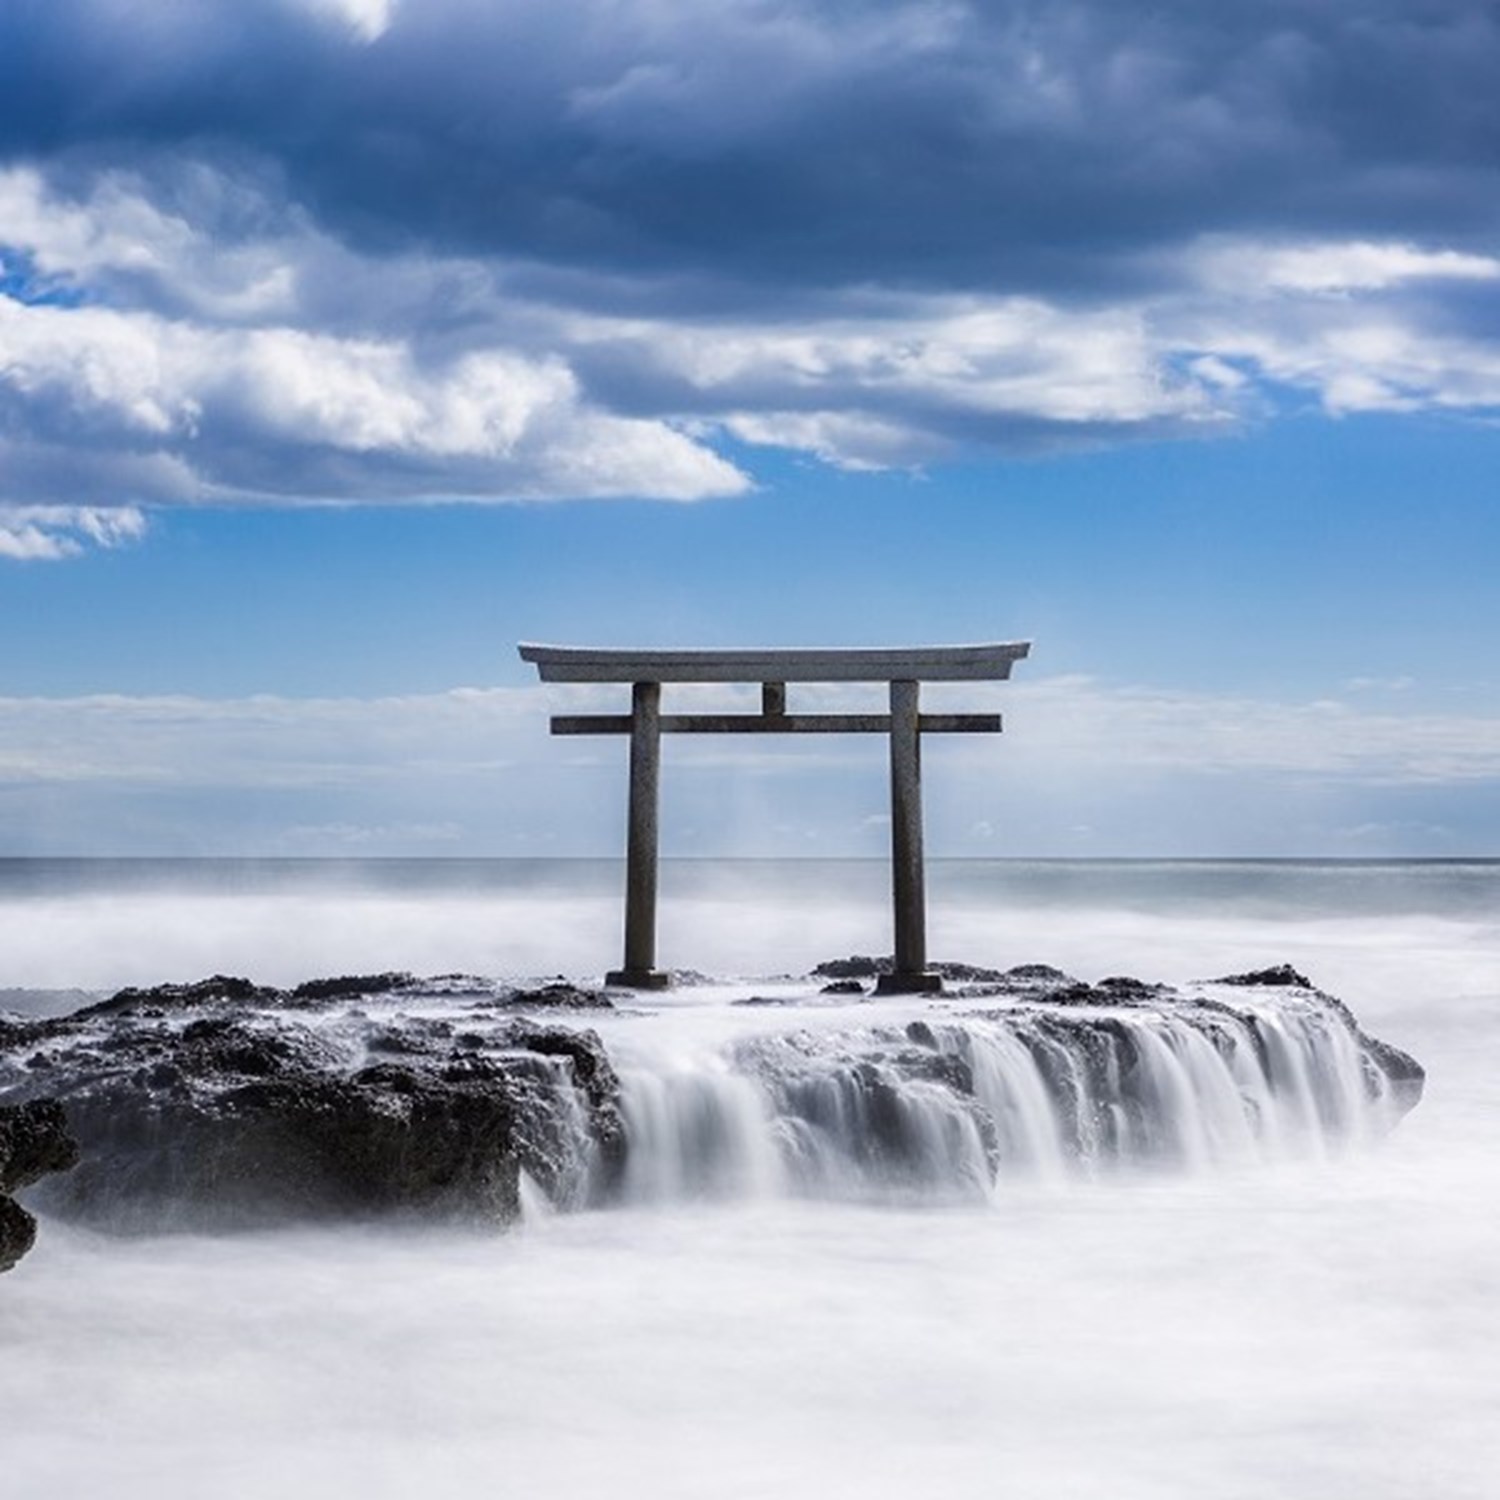 "Kamiiso no Torii Gate" at Oarai-Isosaki Jinja Shrine, Ibaraki Prefecture 4